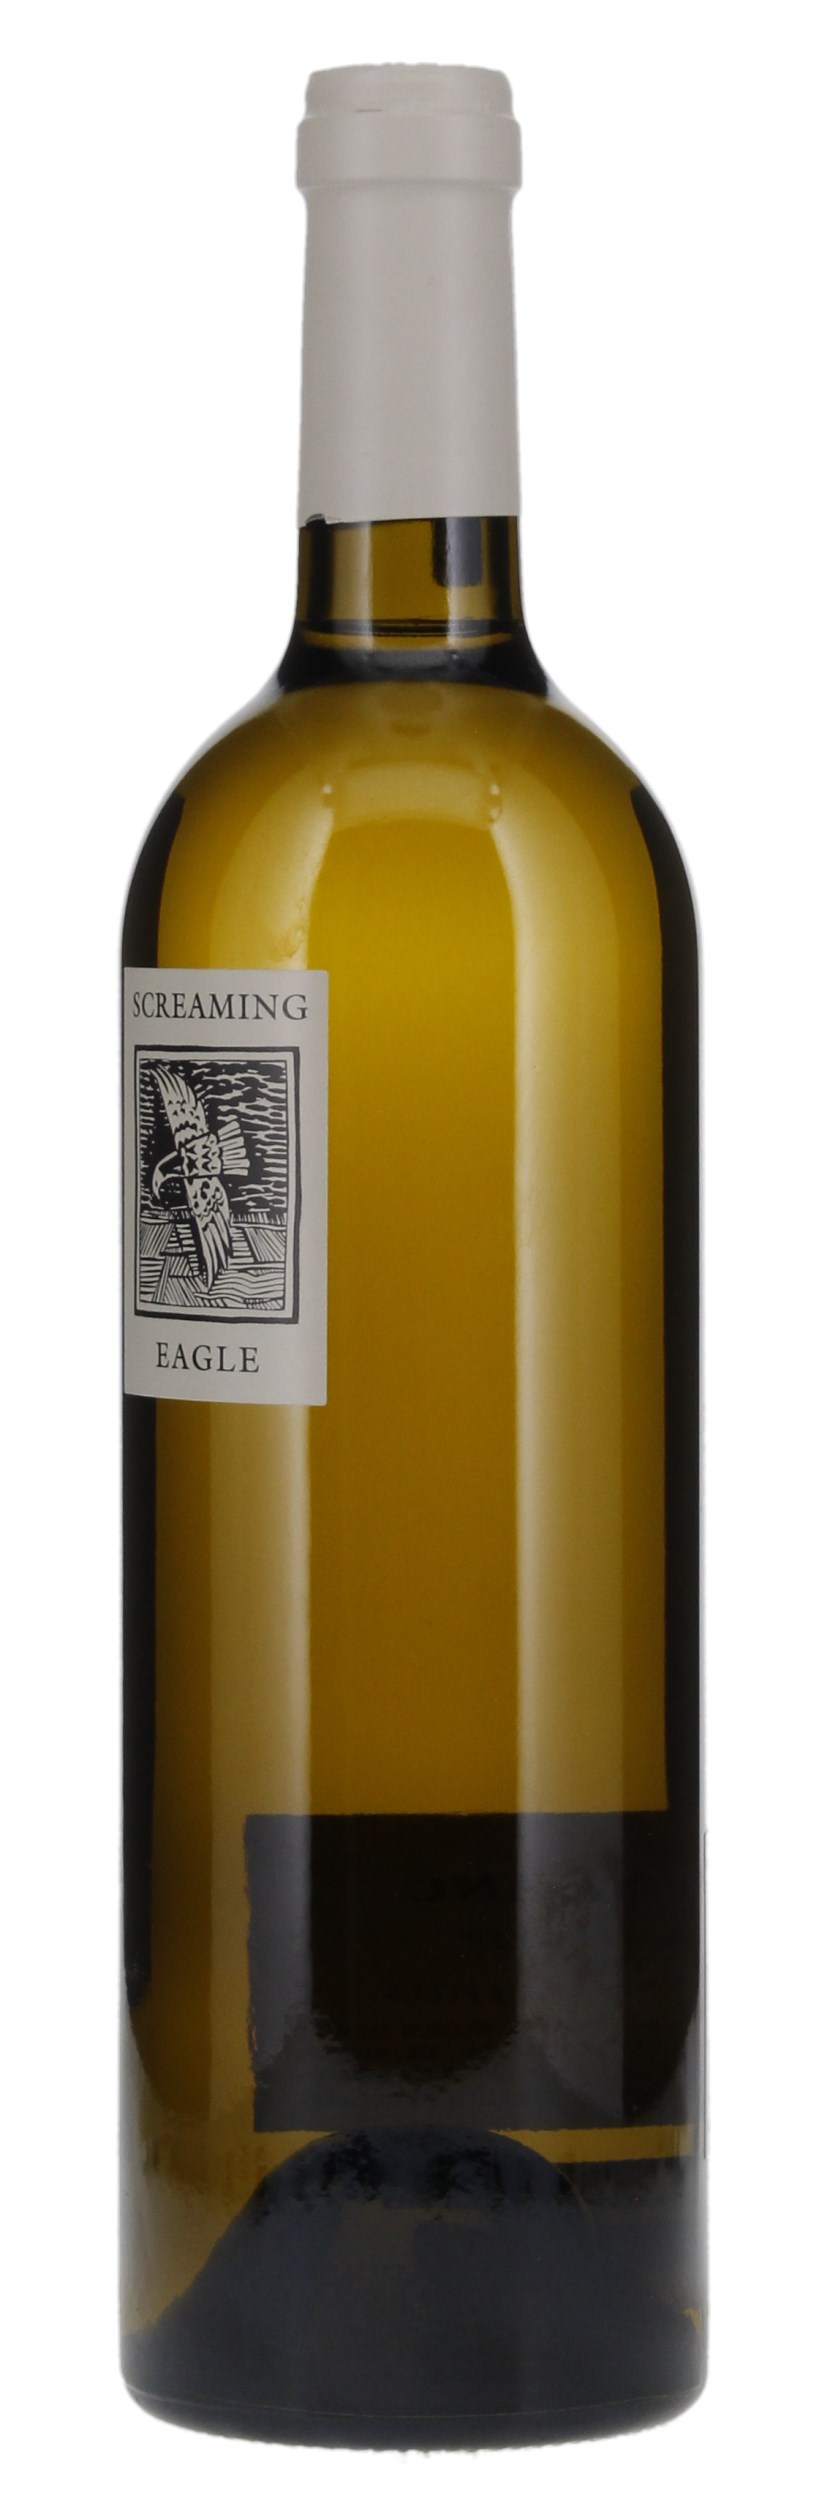 2013 Screaming Eagle Sauvignon Blanc, 750ml